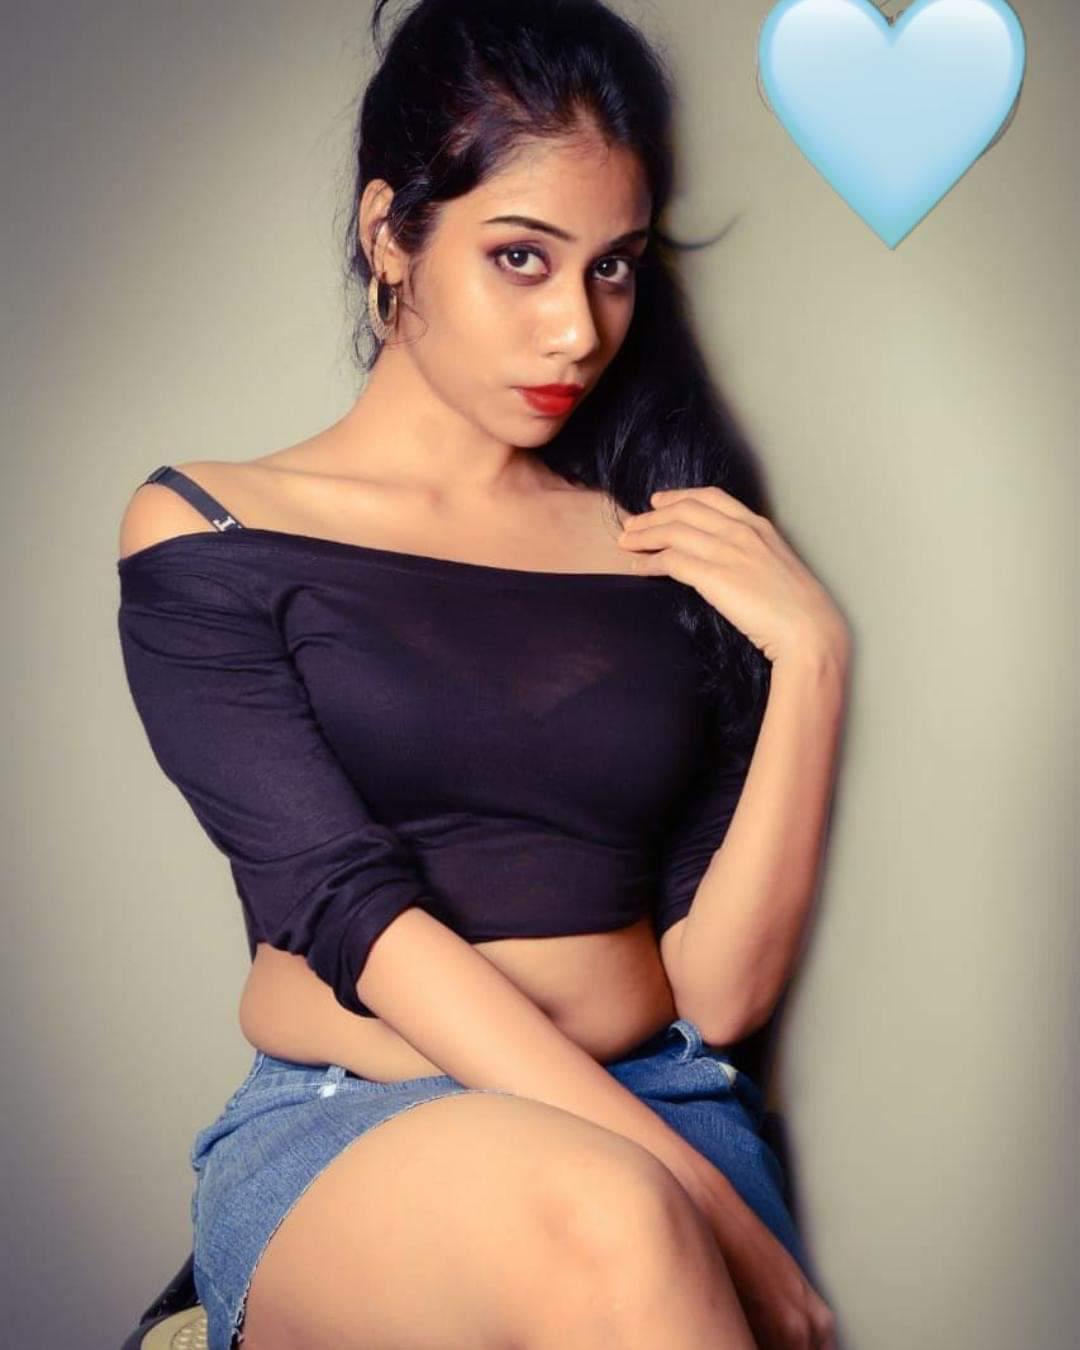 Cute Indian Slut - Indian Slut Whore - Porn Videos & Photos - EroMe